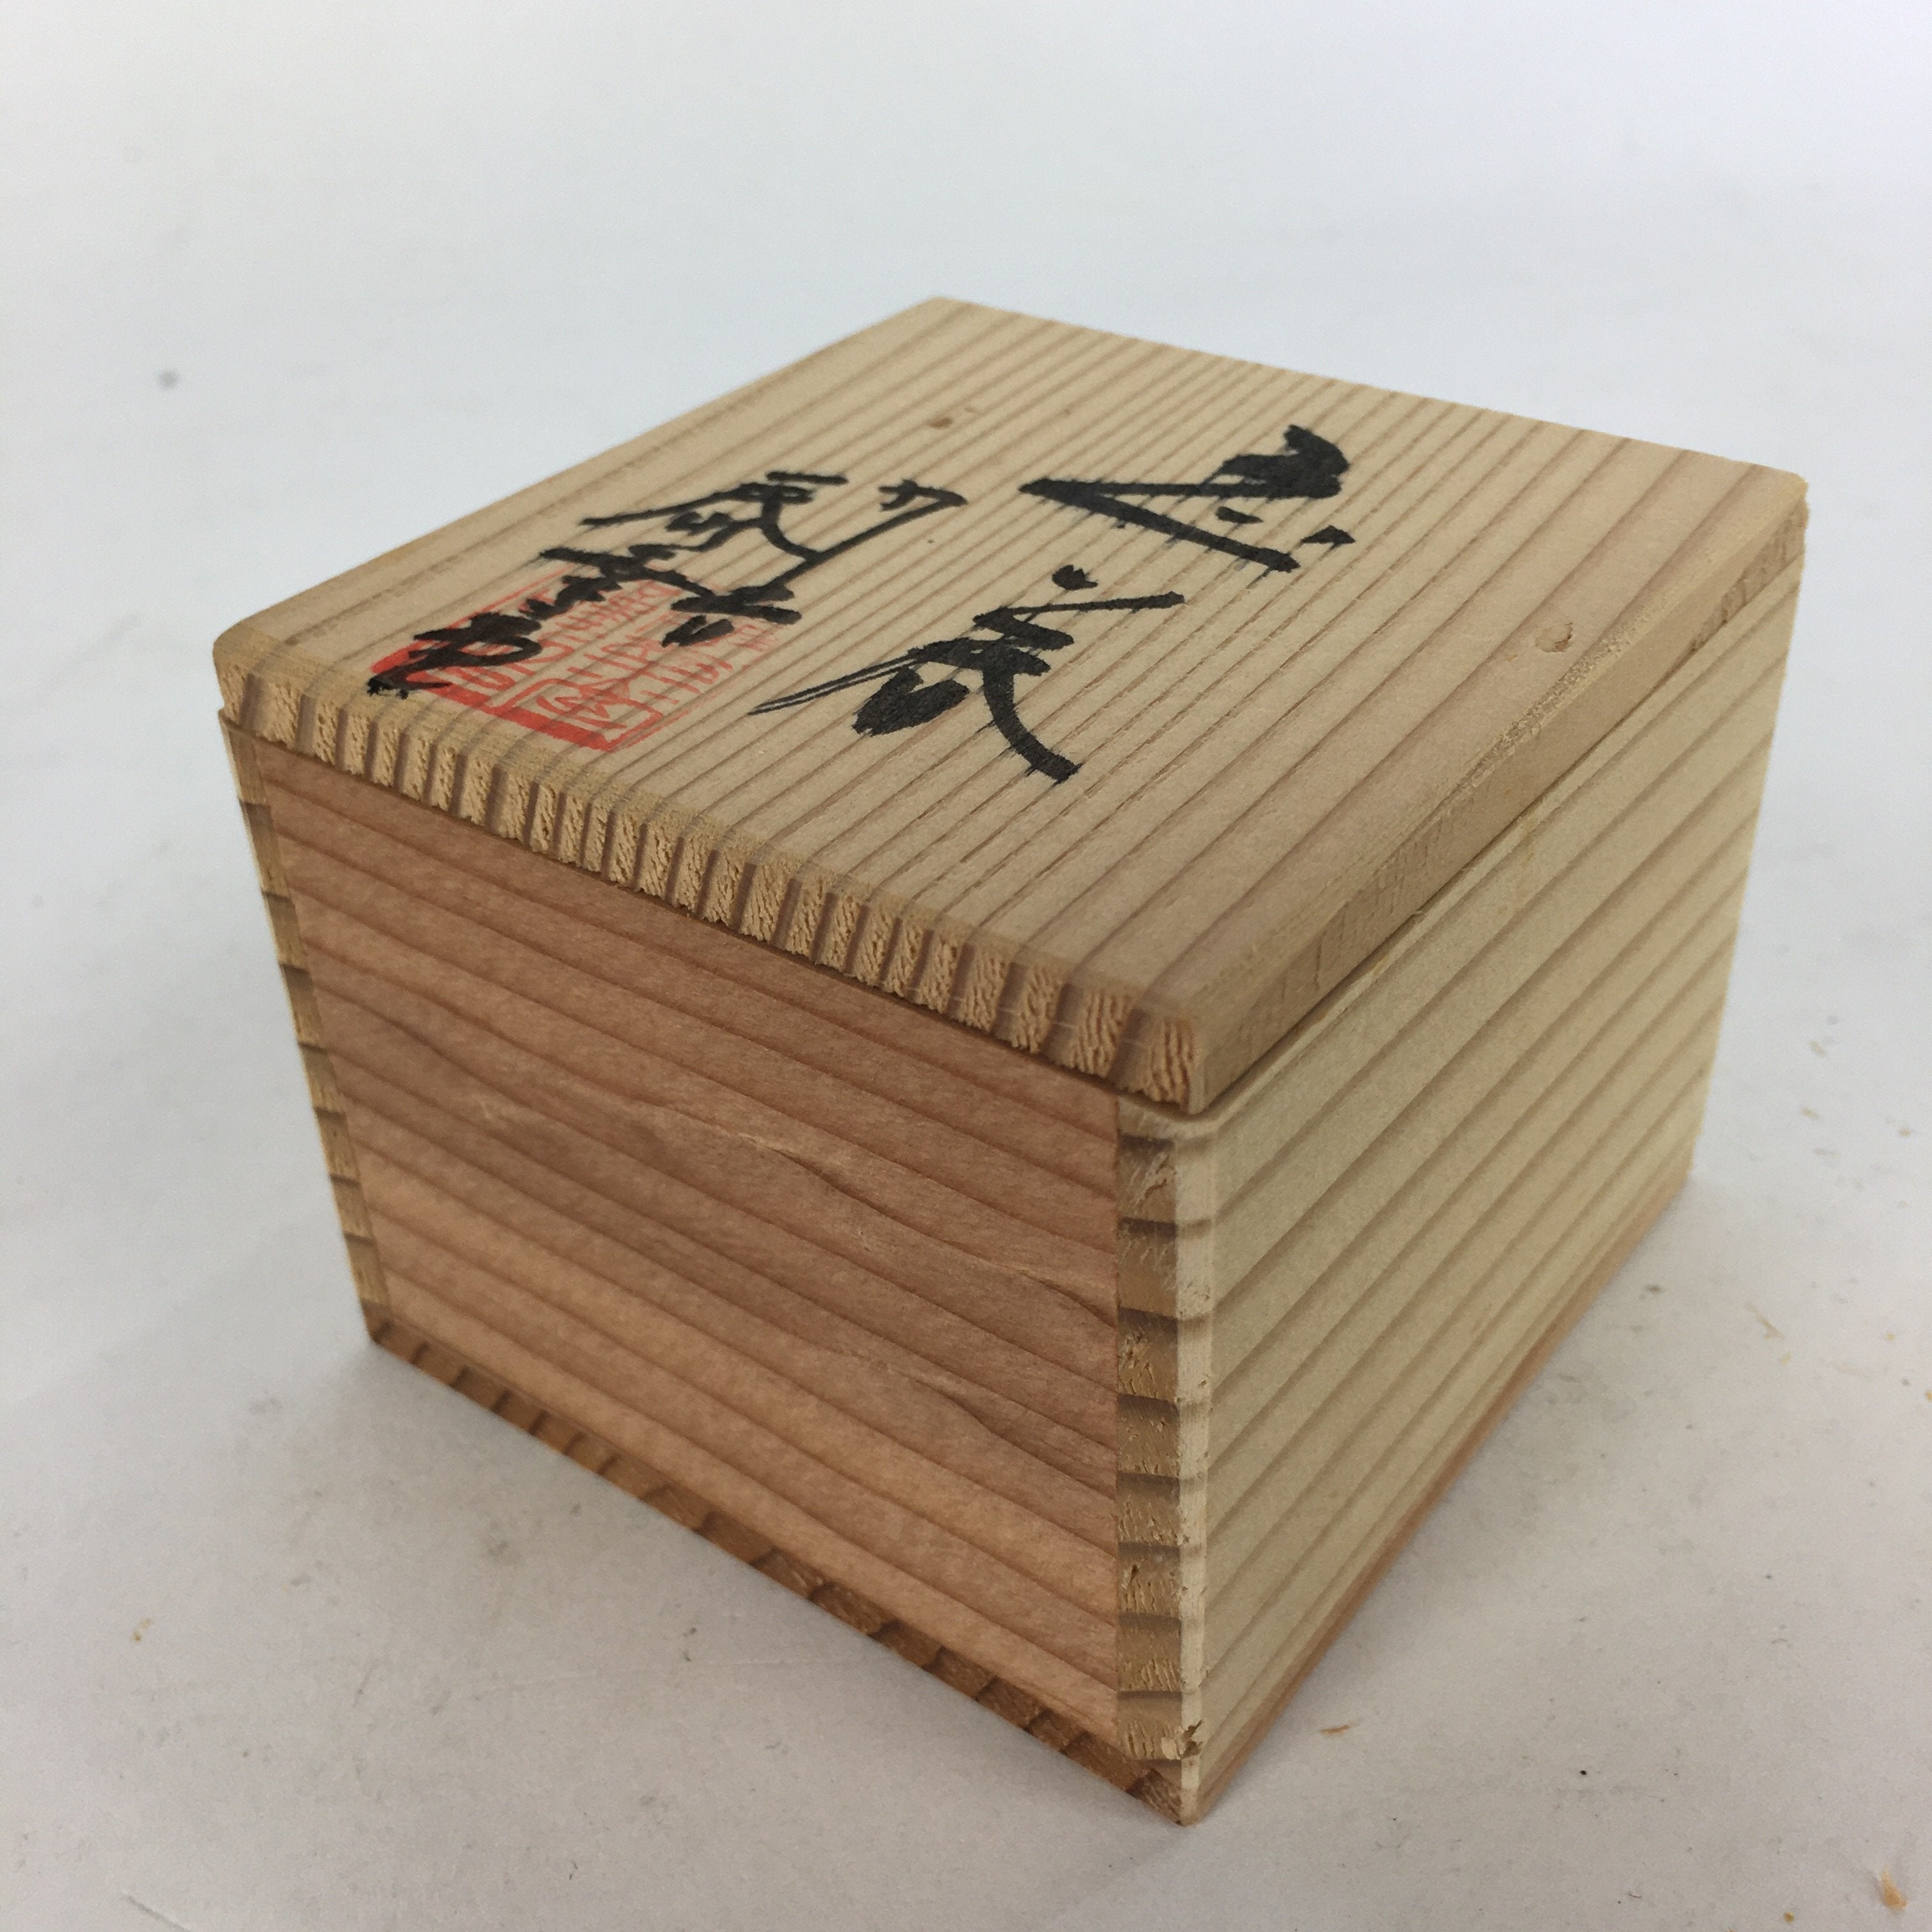 Japanese Wooden Storage Box Pottery Vtg Small Hako Inside 7.1x 6.9x5.3cm WB810